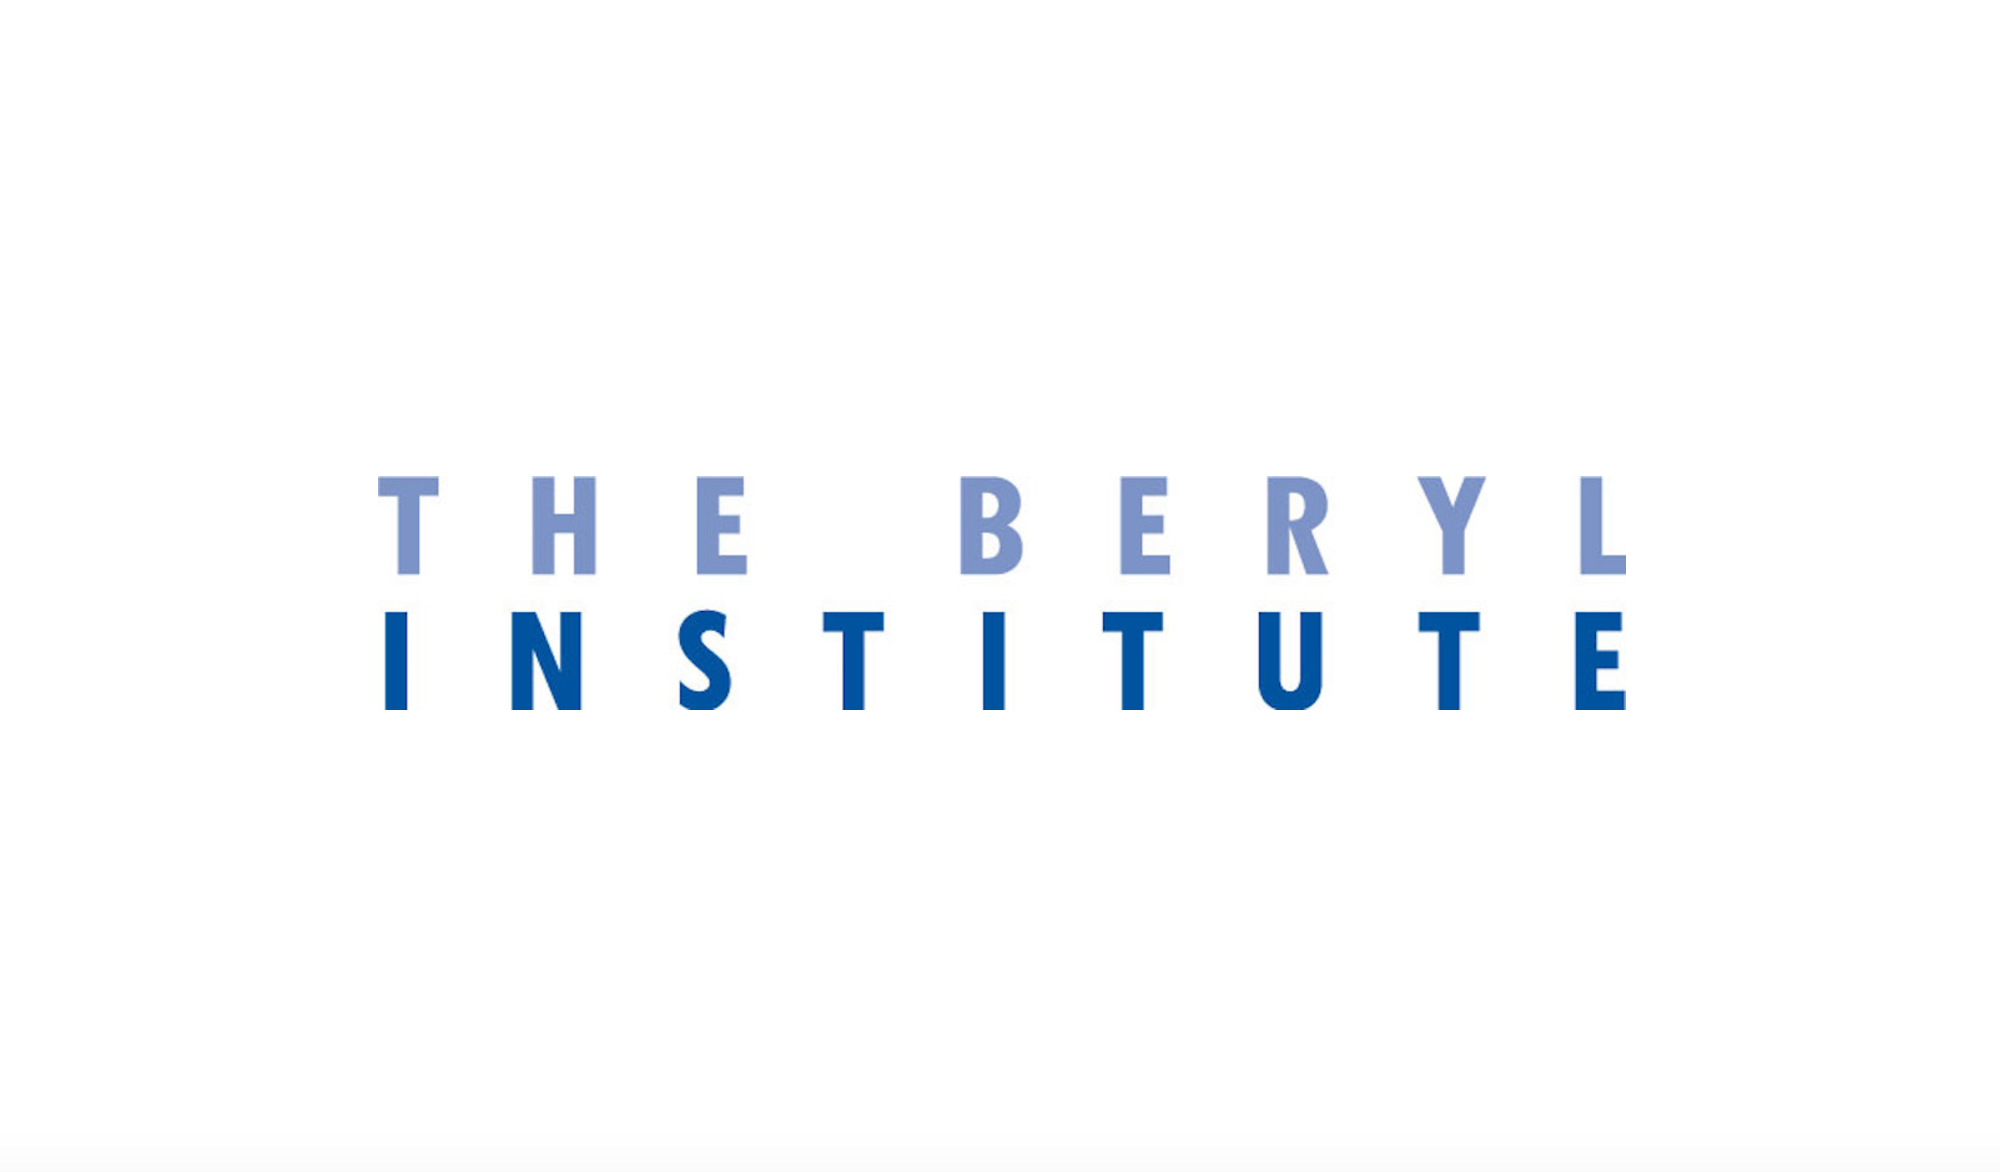 The Beryl Institute logo.